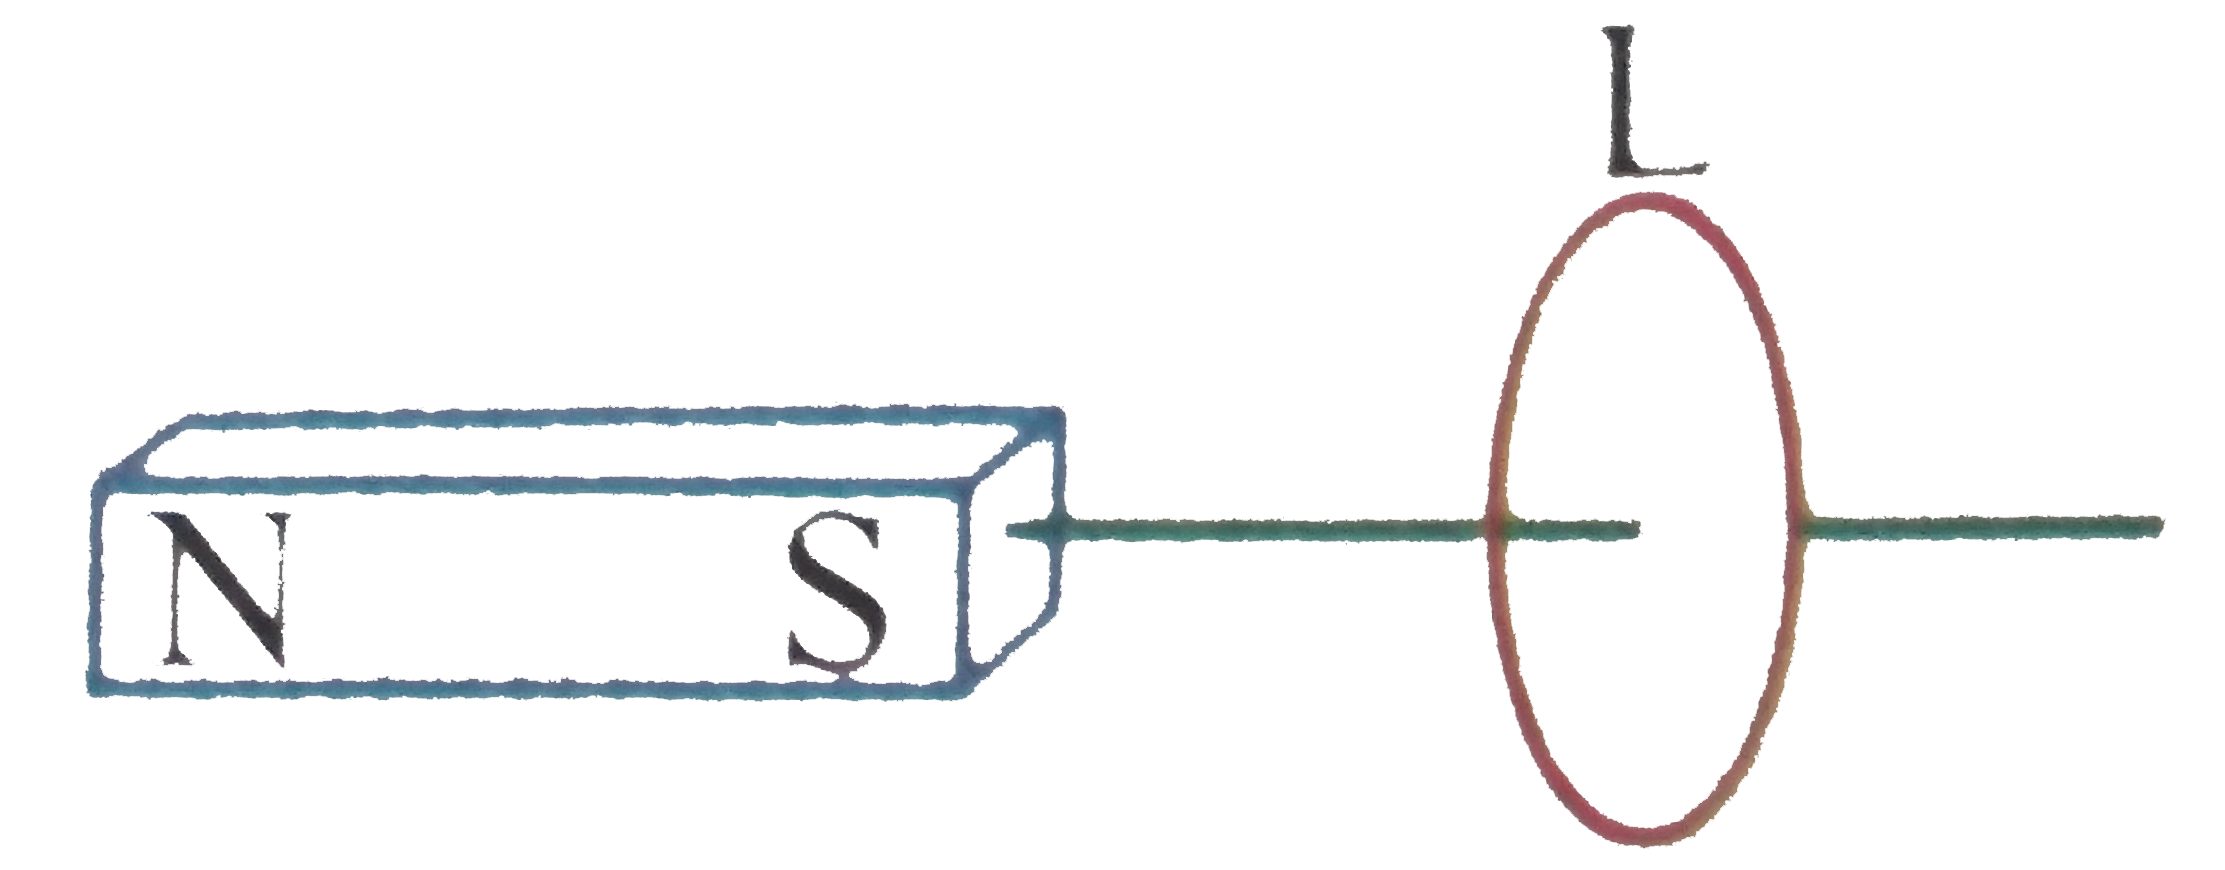 Figure shows a loop model (loop L) for a diamgnetic material.